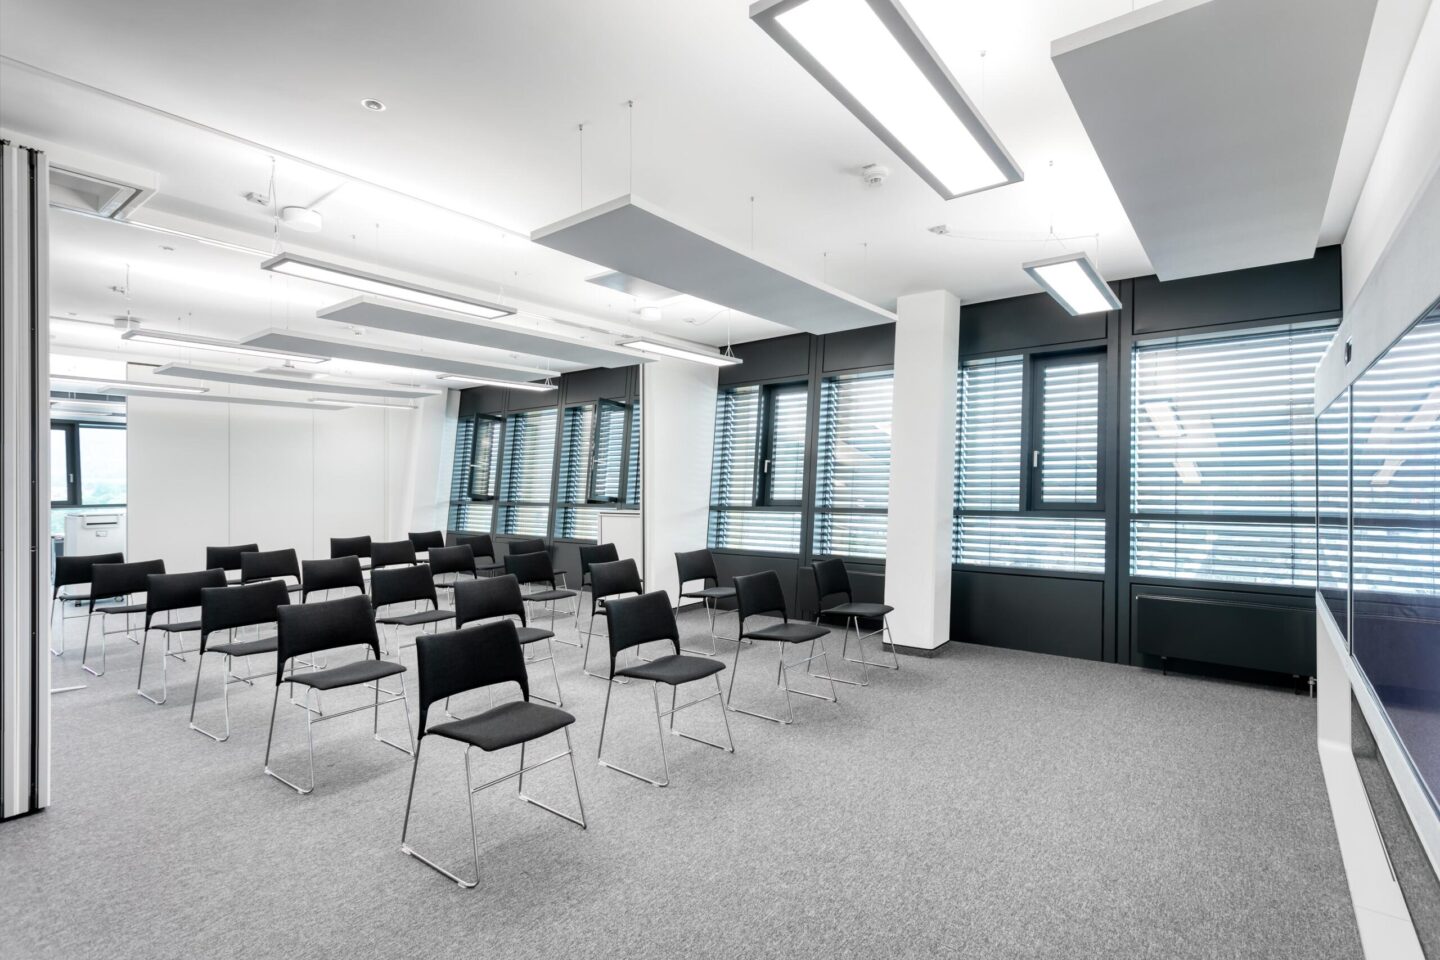 Alcon Freiburg im Breisgau │ Open spaces office │ modern working environments │ meeting rooms